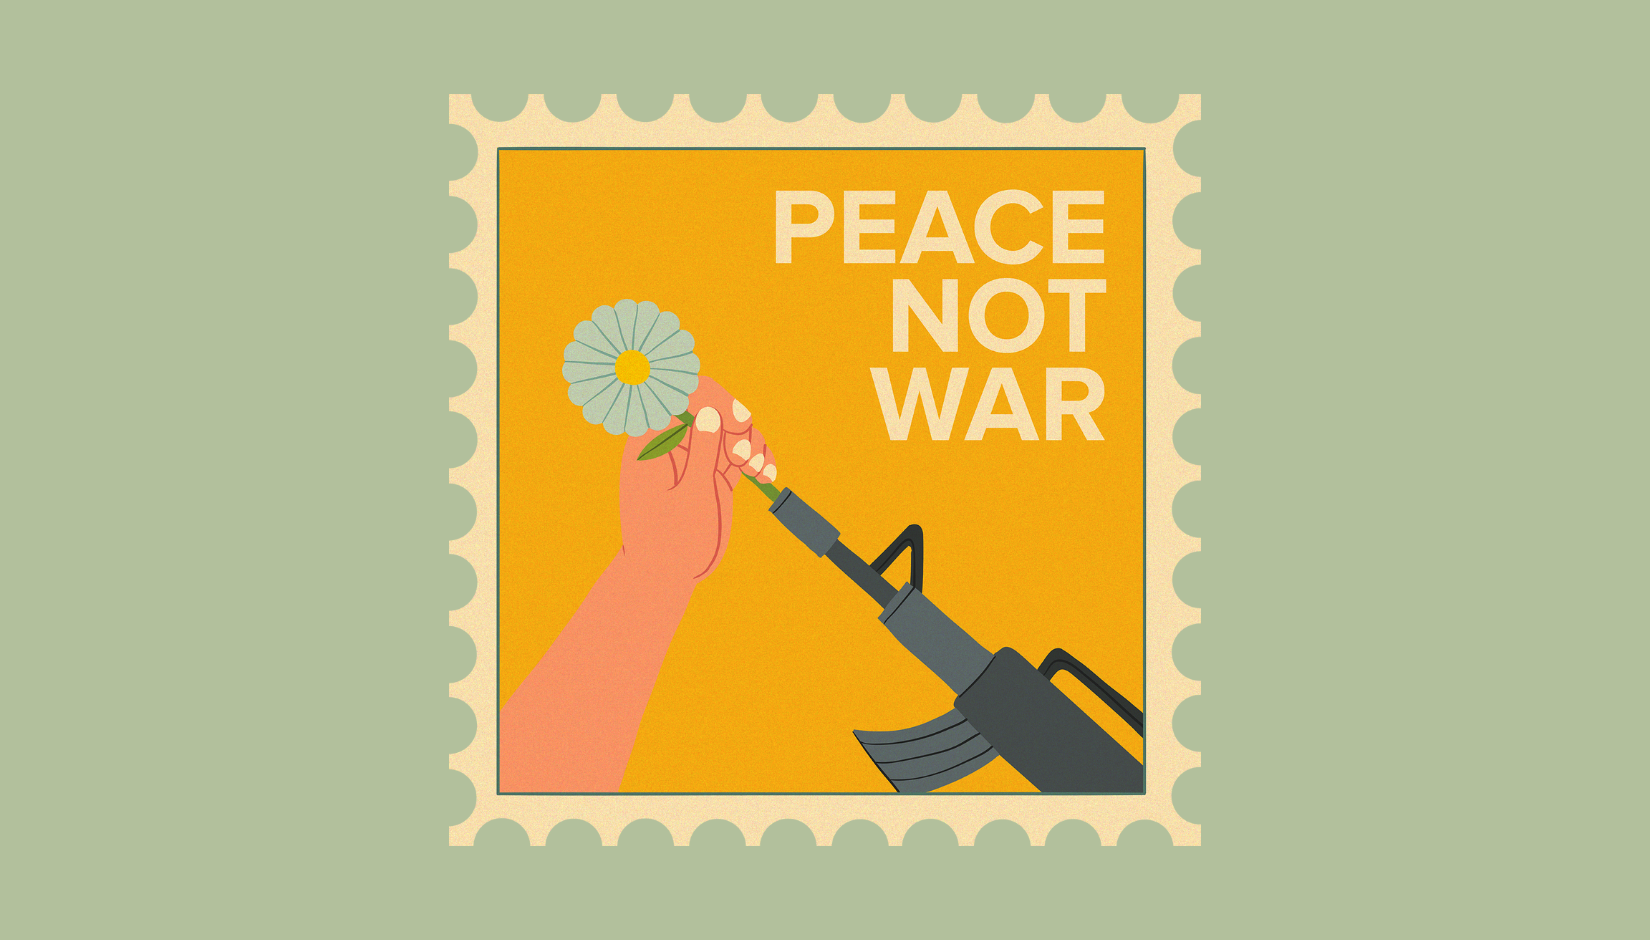 pace no guerra